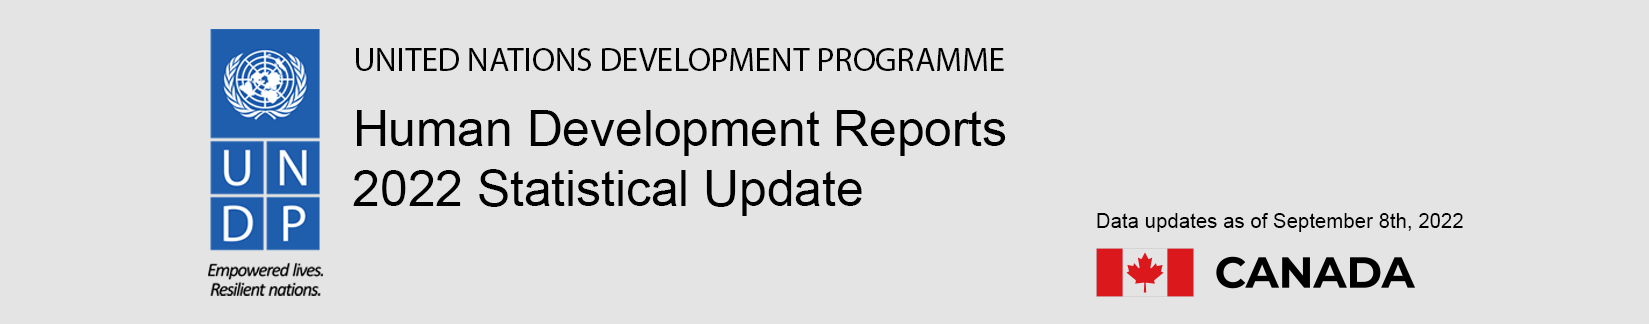 UNDP Human development reports 2022 stats, canada